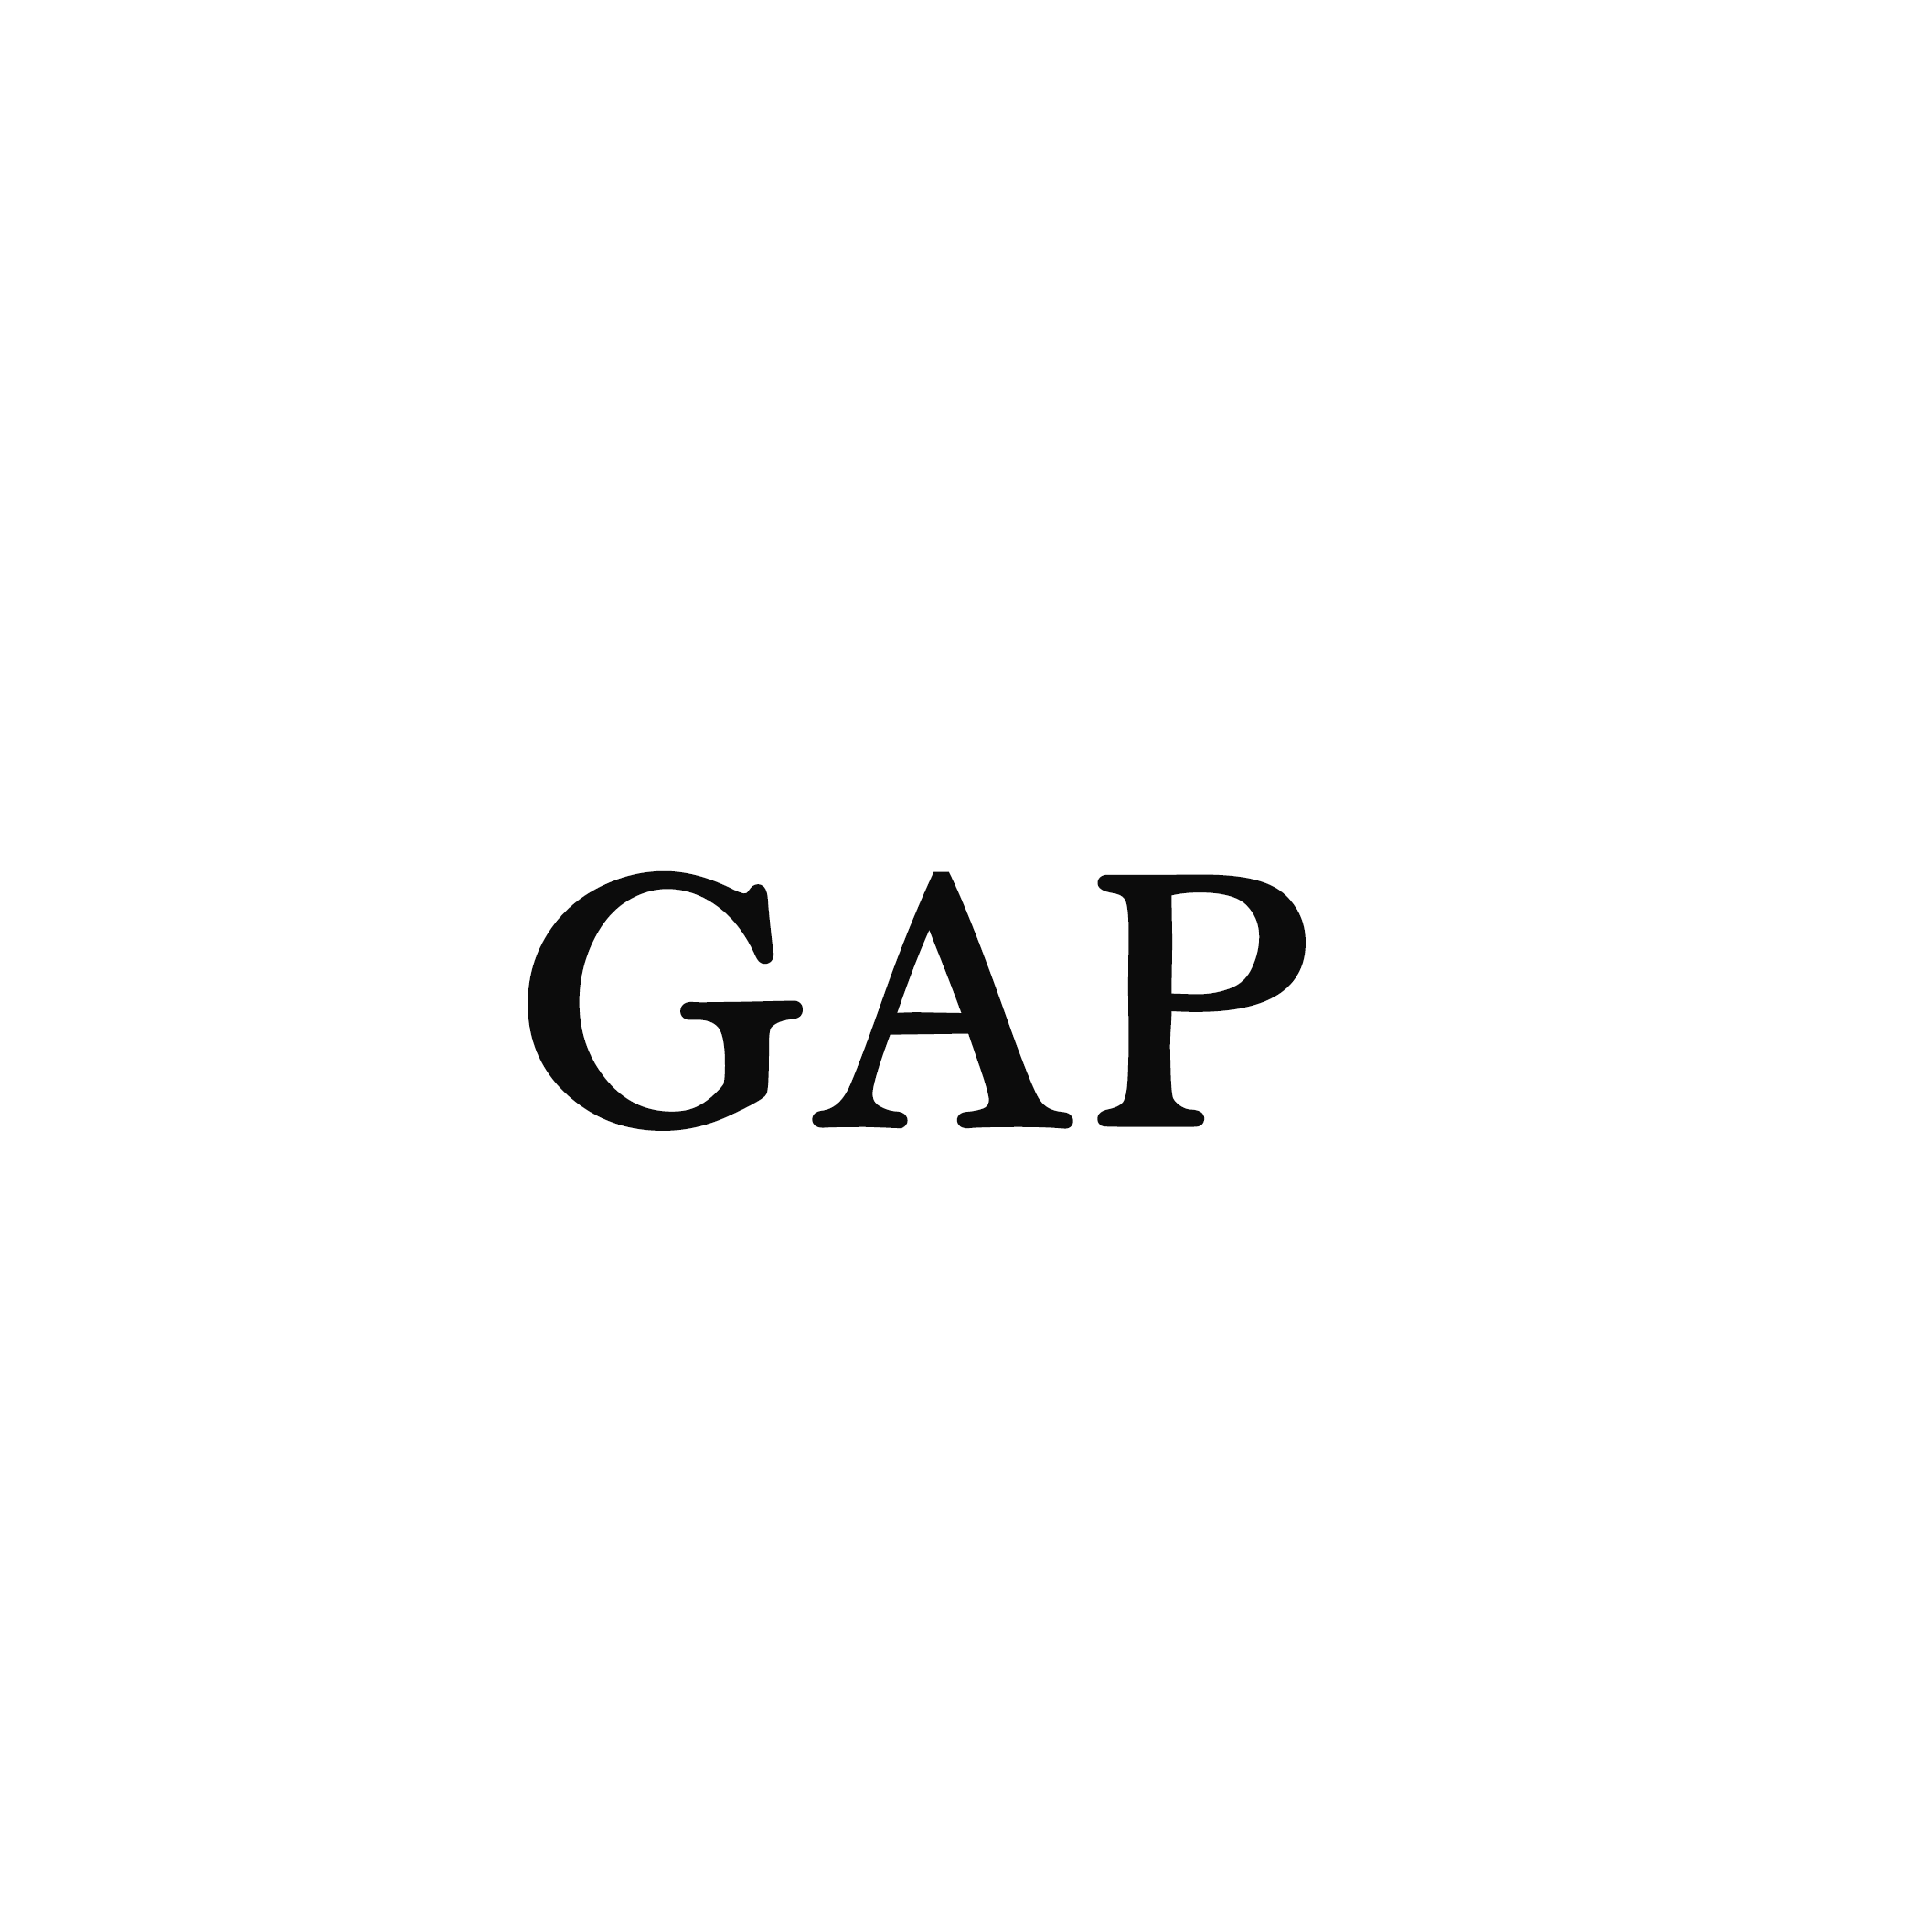 Product Brand: GAP